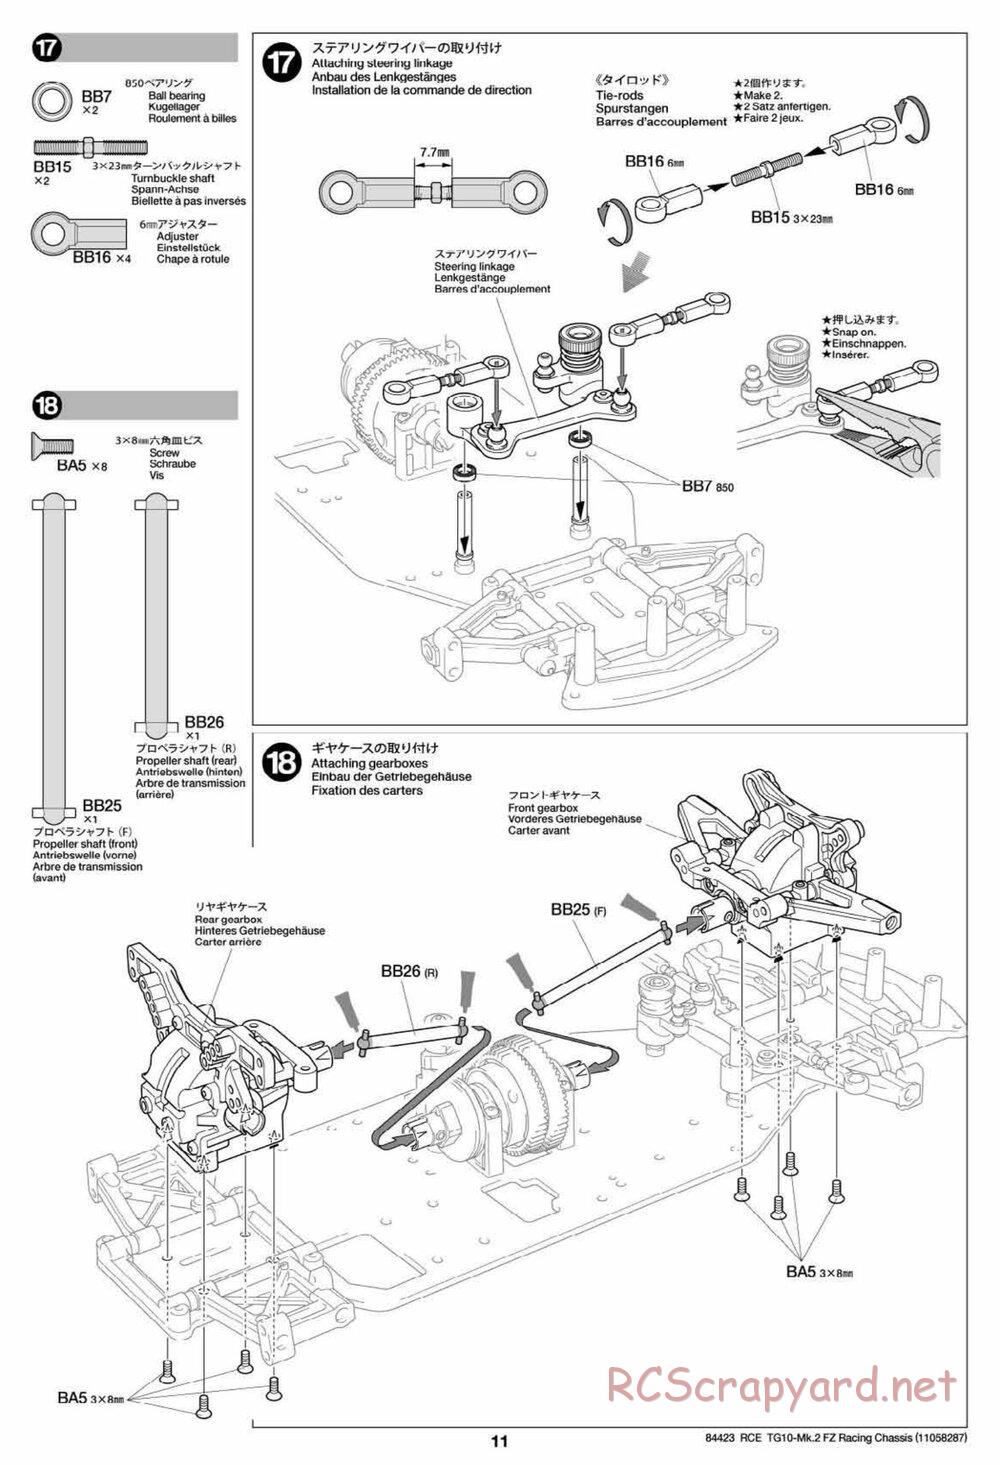 Tamiya - TG10 Mk.2 FZ Racing Chassis - Manual - Page 11